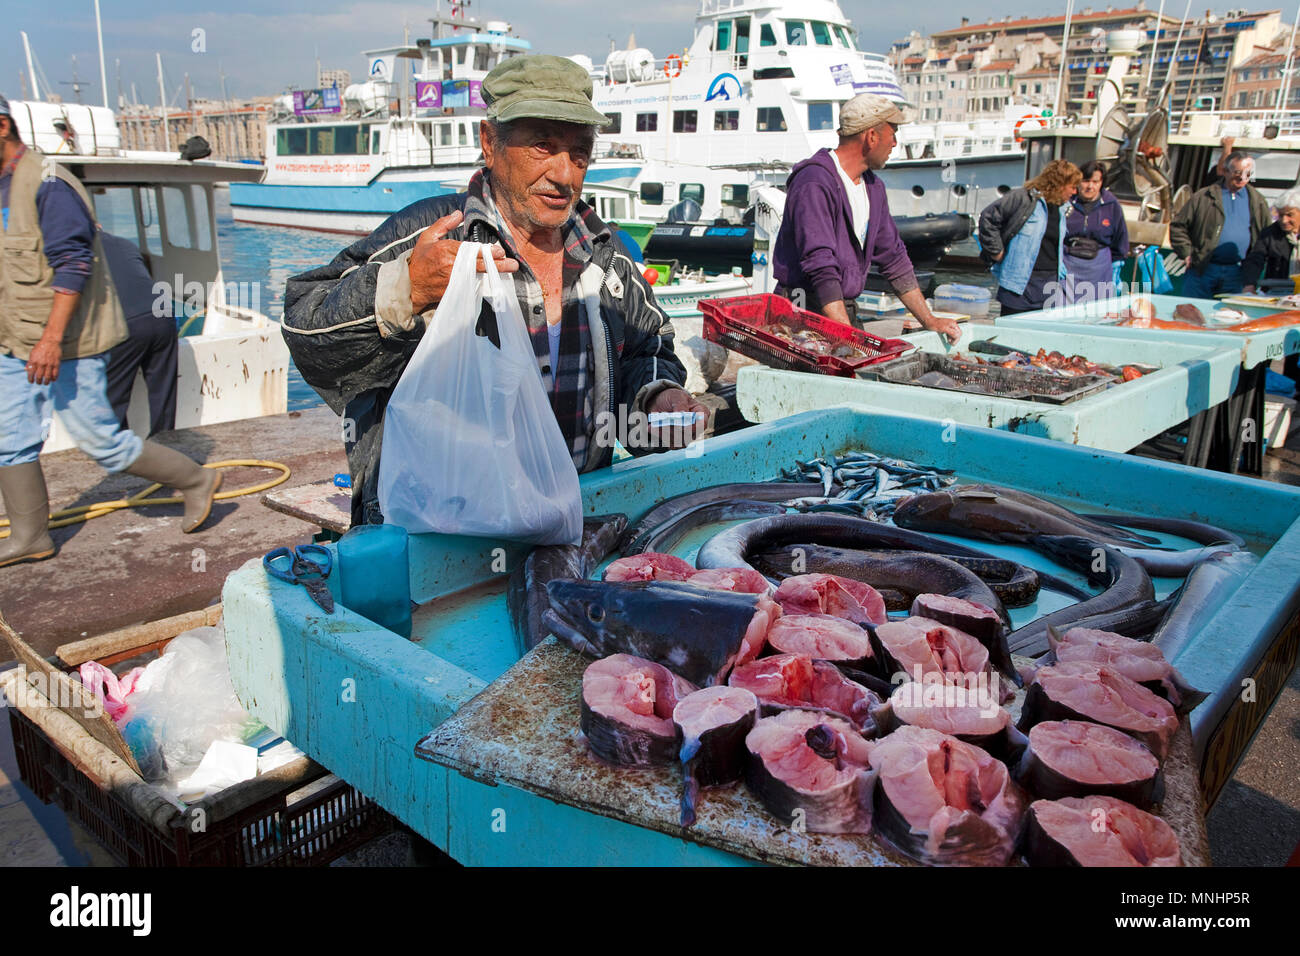 Fisherman selling fish at harbour Vieux Port, Marseille, Bouches-du-Rhone, Provence-Alpes-Côte d’Azur, South France, France, Europe Stock Photo